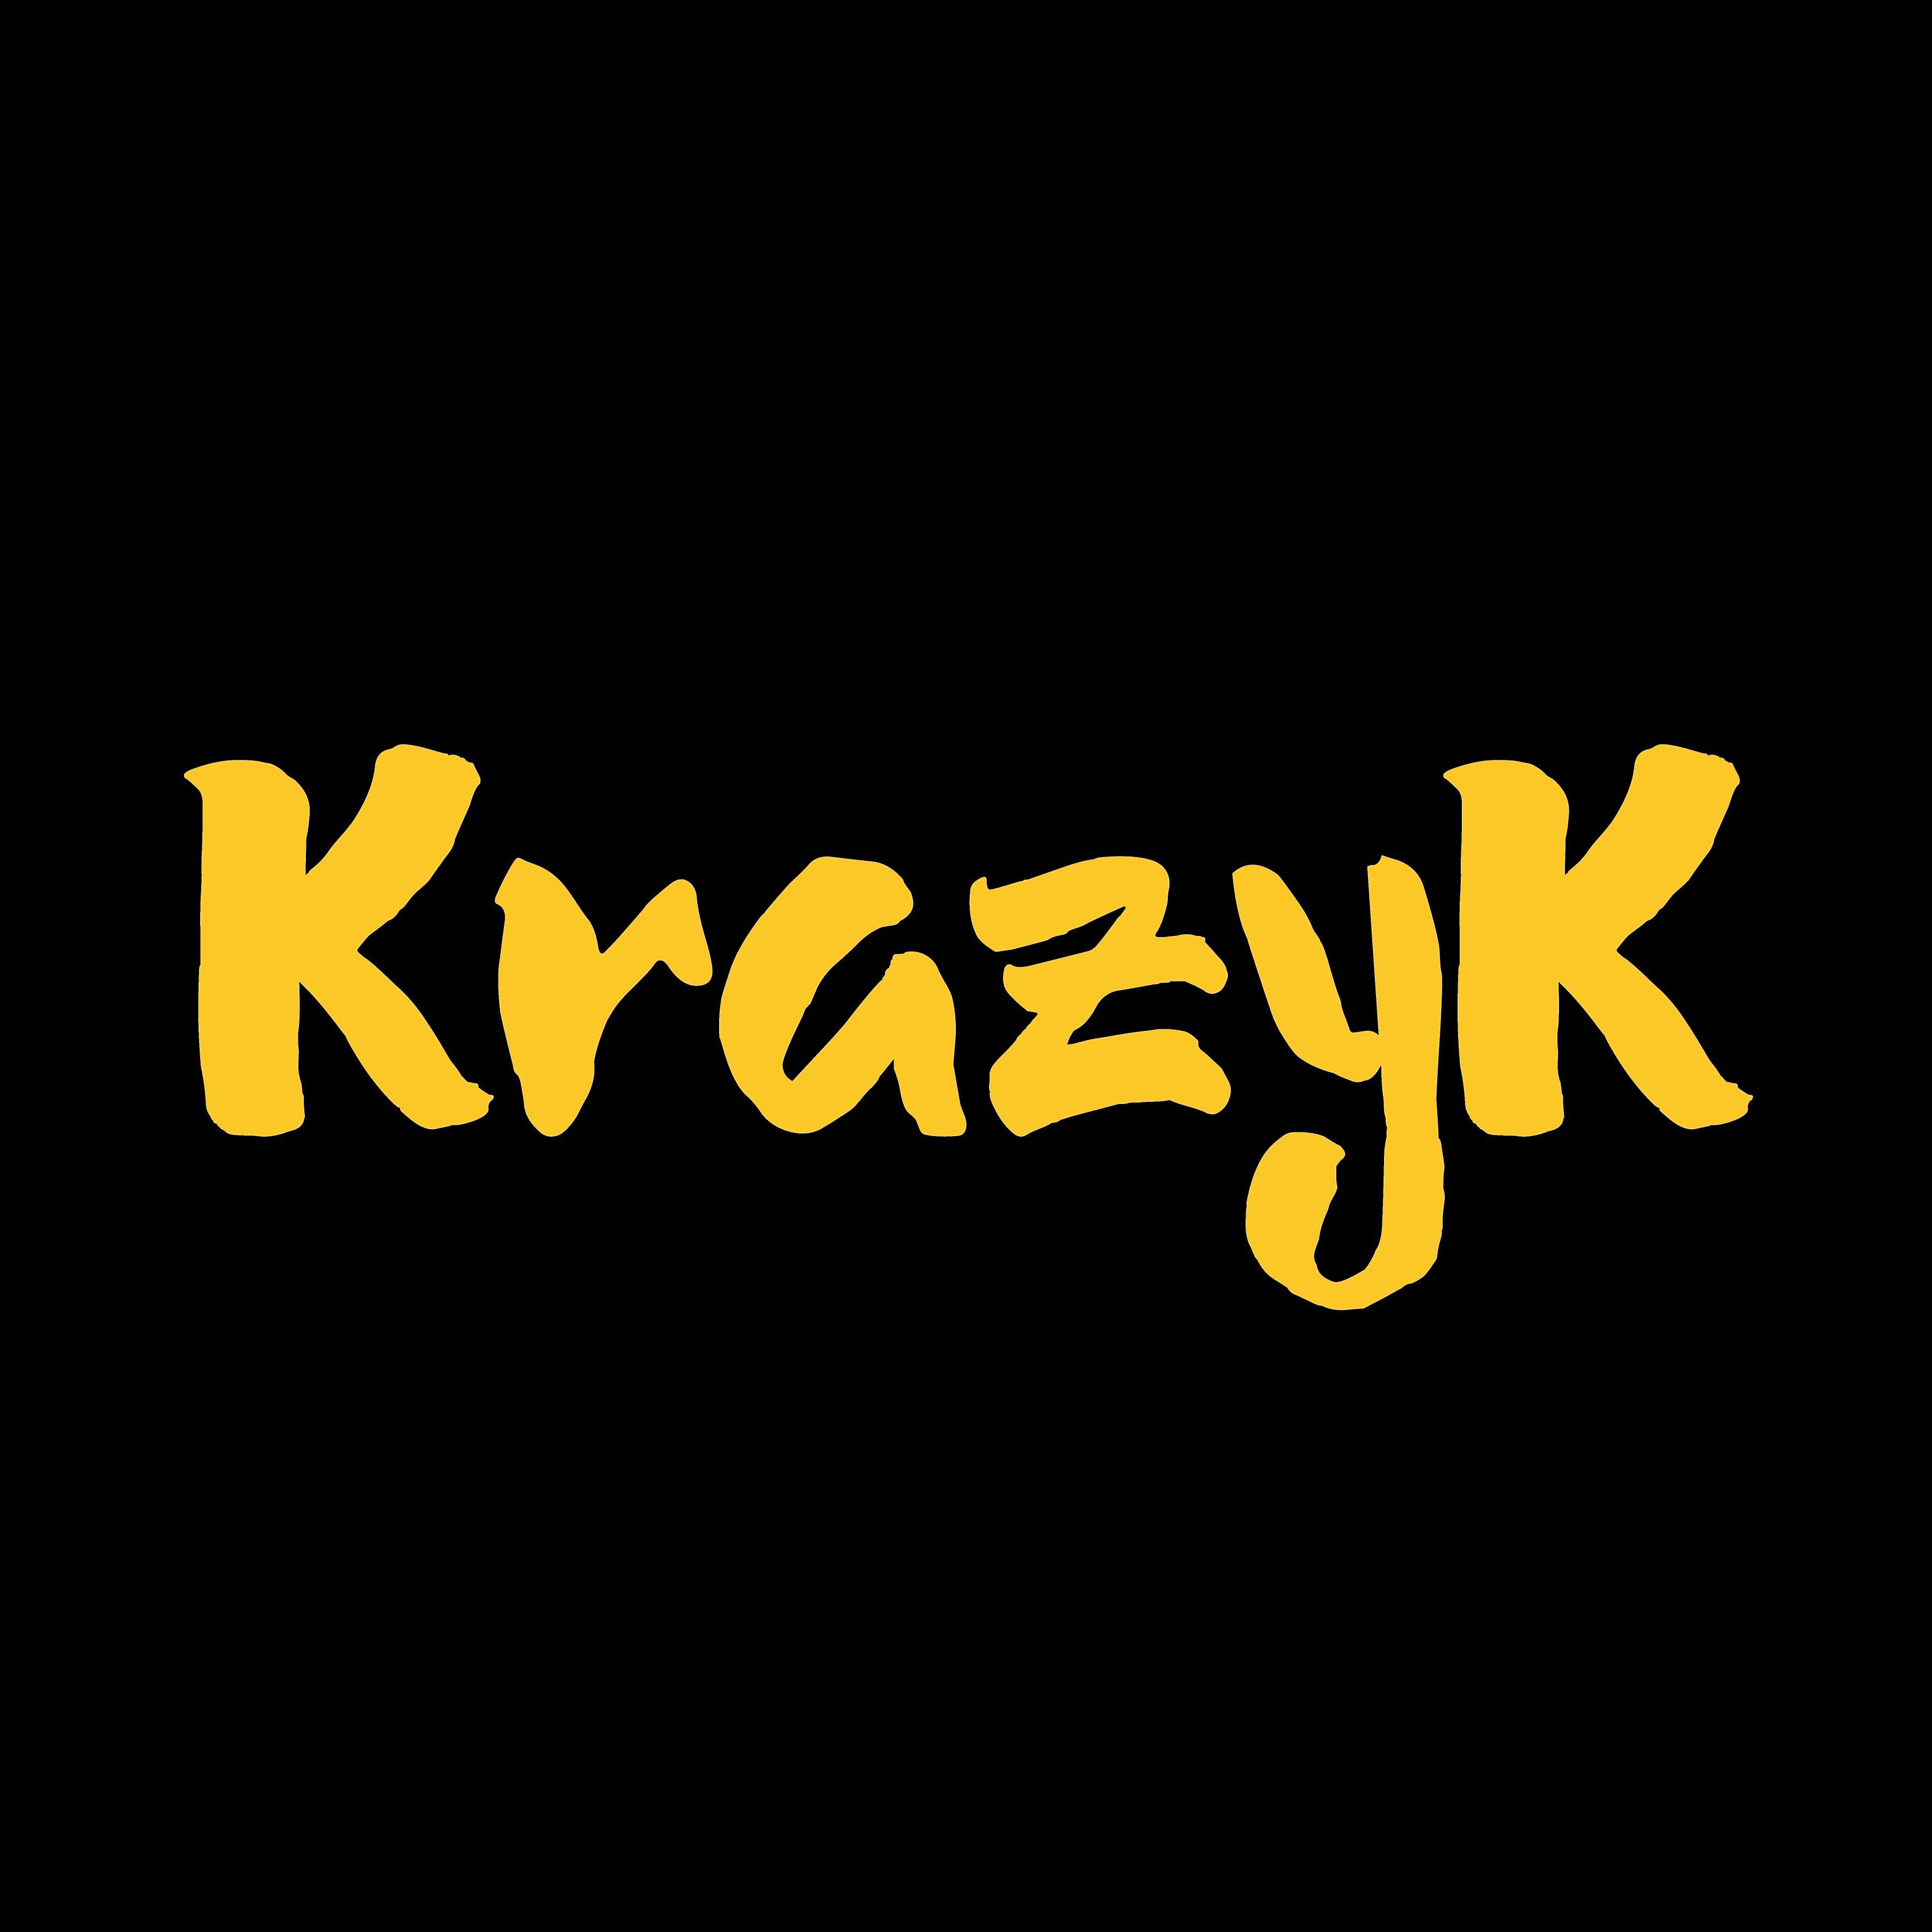 Krazy Logo - Krazy Logo for KrazyK